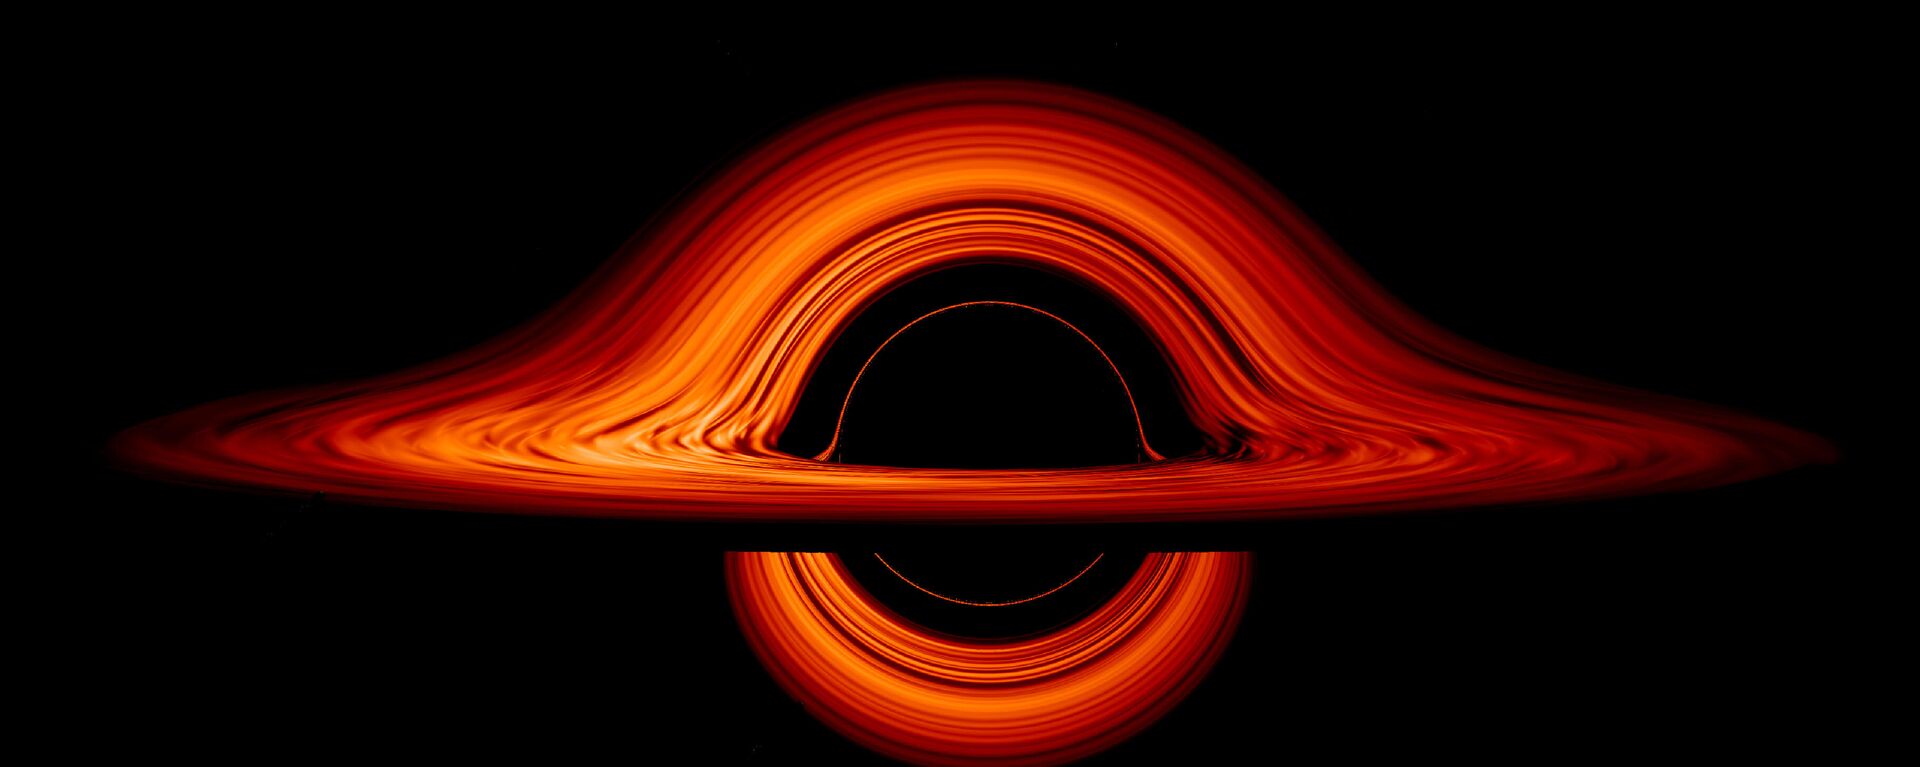 Un agujero negro, imagen referencial - Sputnik Mundo, 1920, 17.11.2021